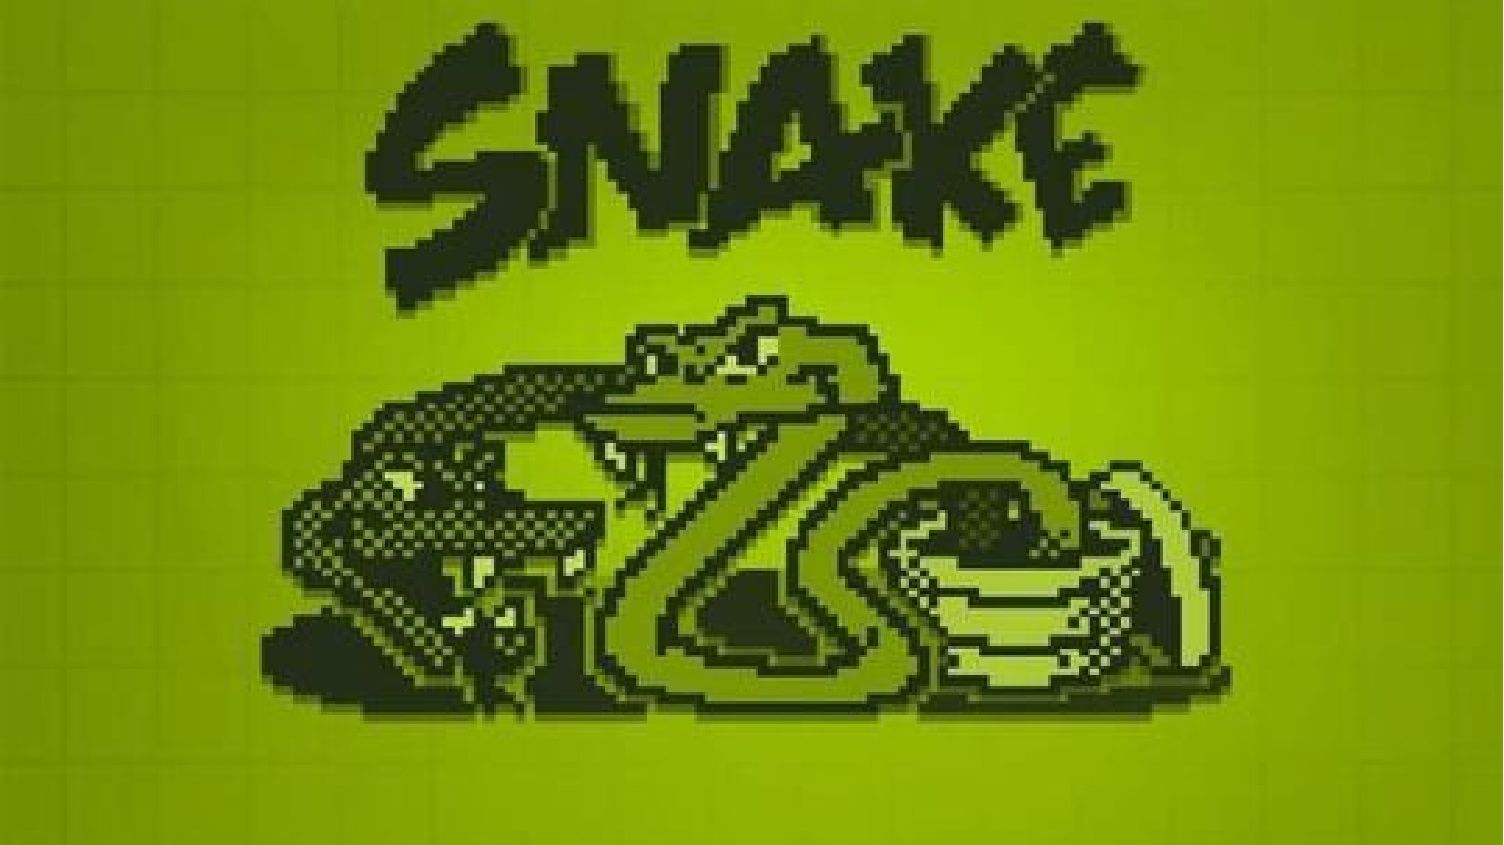 classic snake gamne